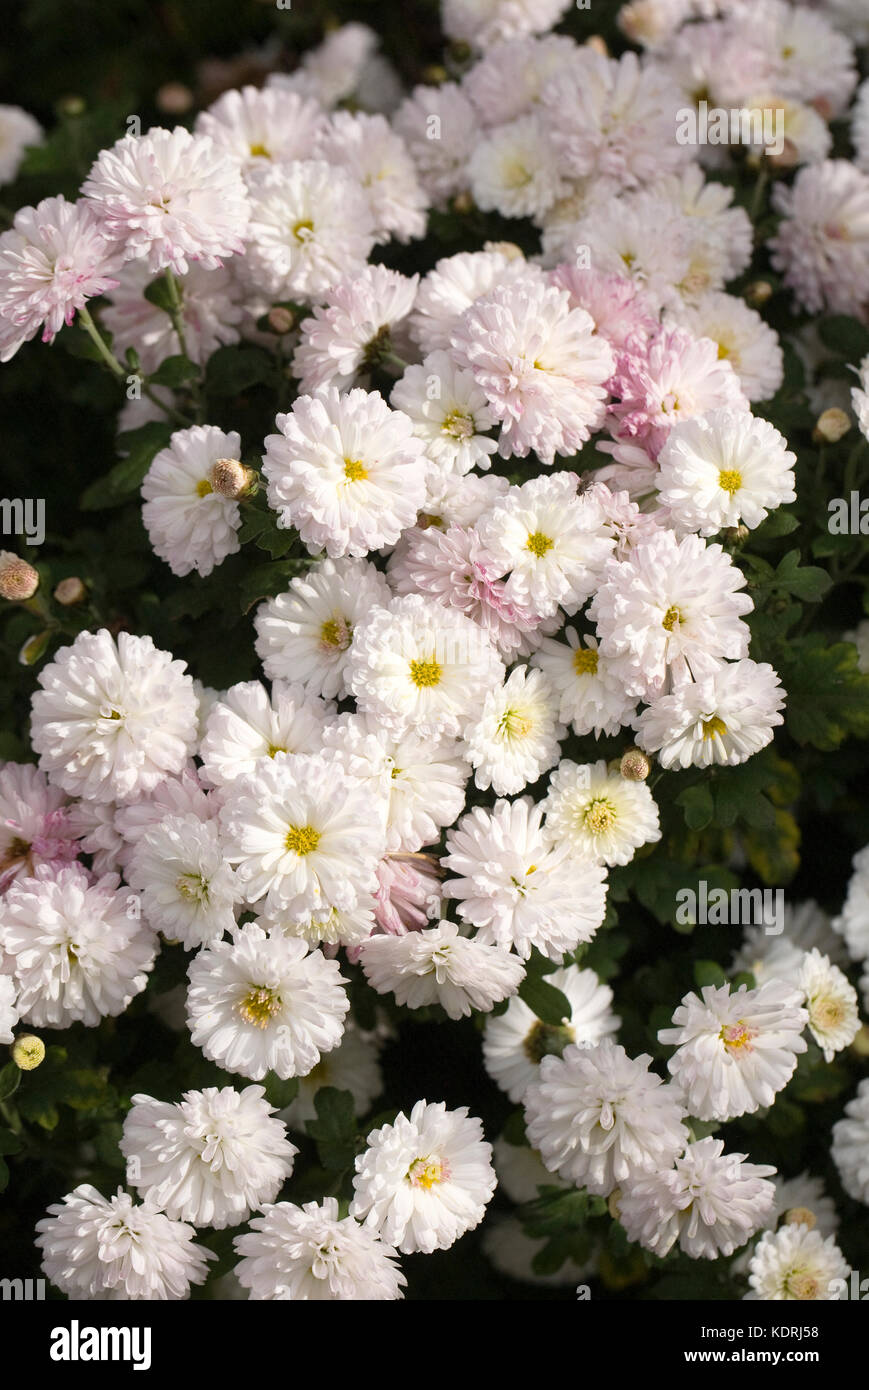 Chrysanthemum 'Purleigh White' flowers in the garden. Hardy chrysanthemums. Stock Photo